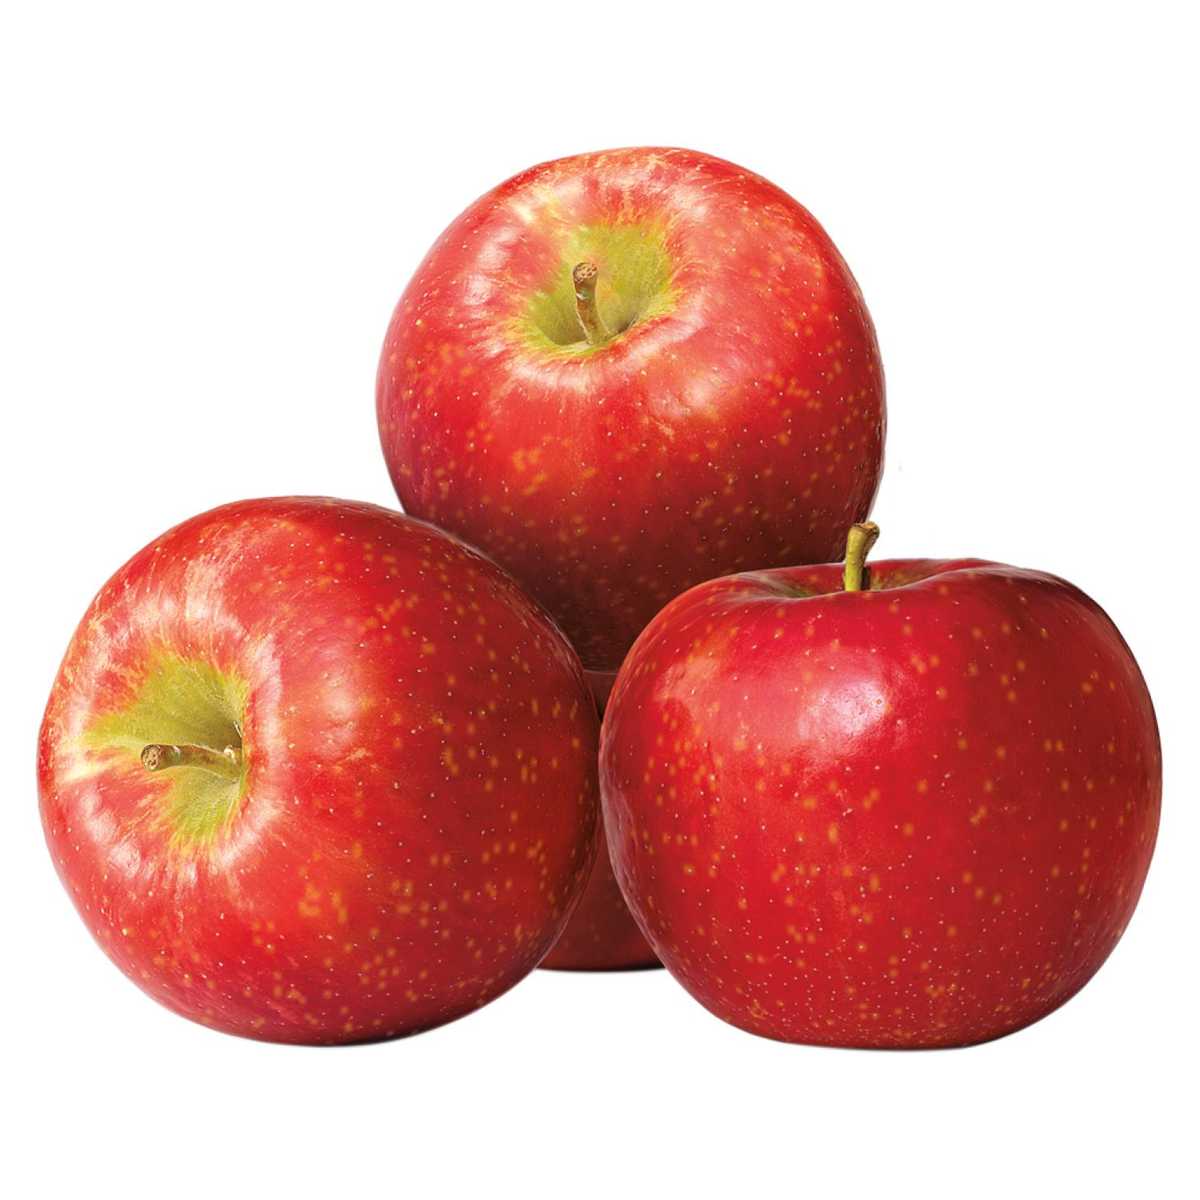 Organic Honeycrisp Apples (2 lb) Delivery - DoorDash